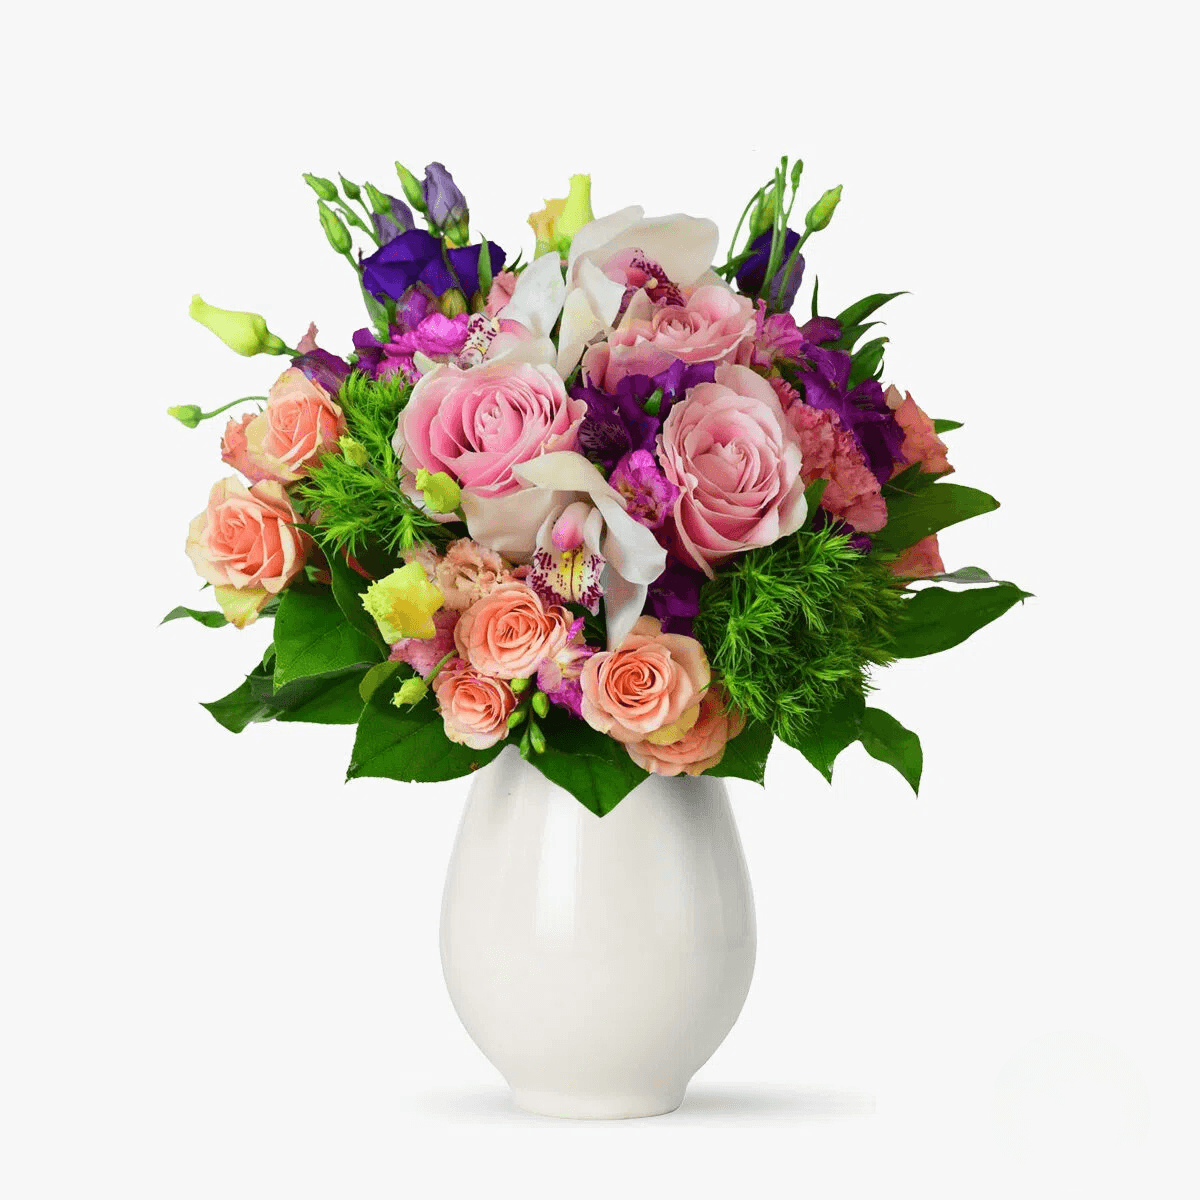 Aranjament floral – Galben si violet – Standard Aranjament